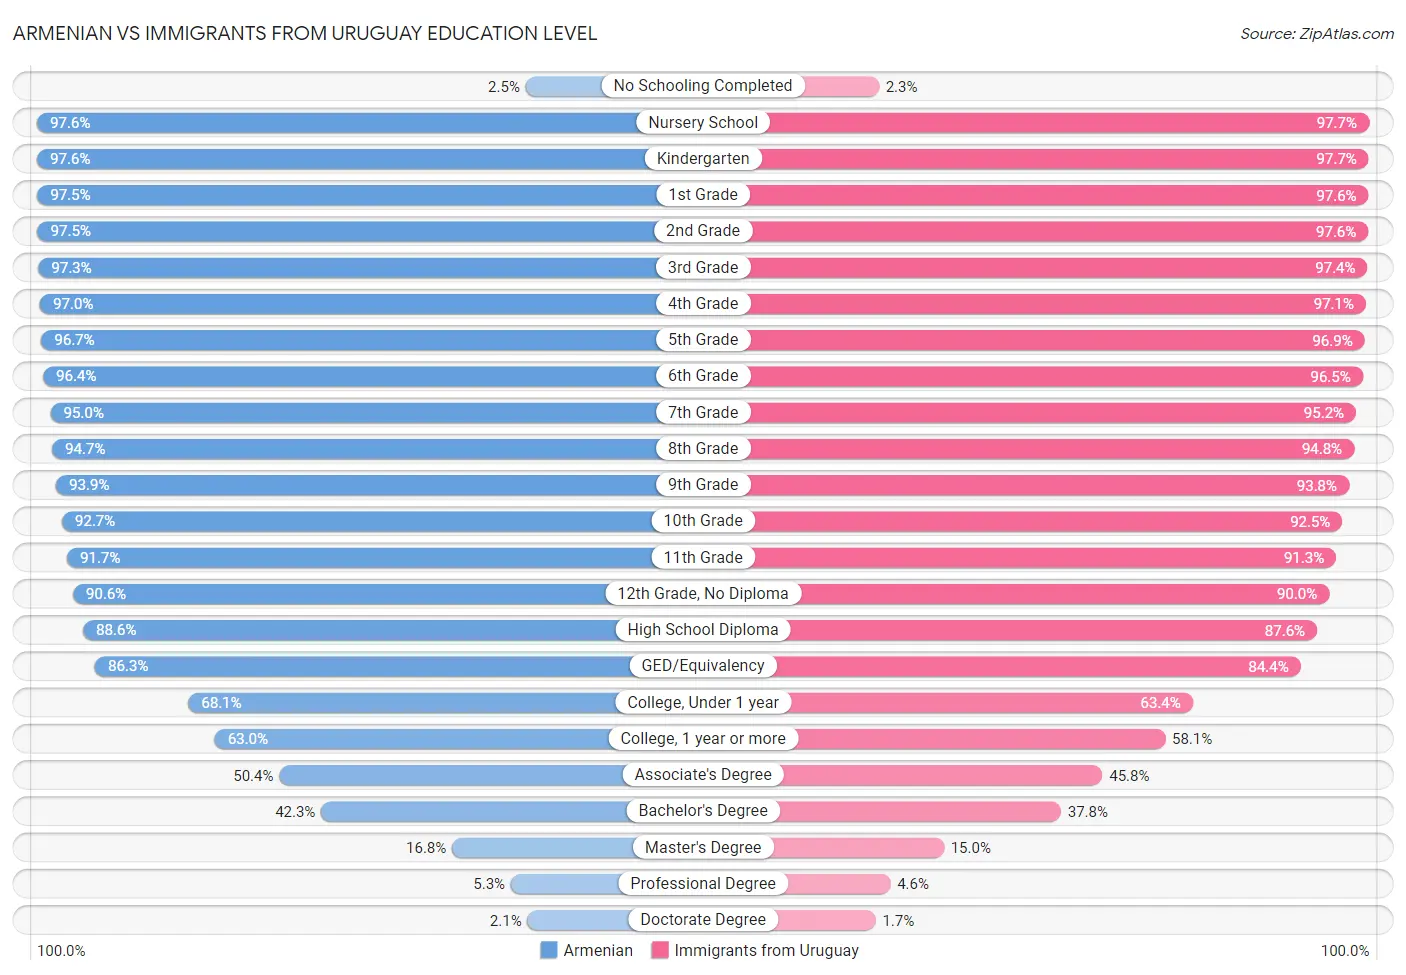 Armenian vs Immigrants from Uruguay Education Level